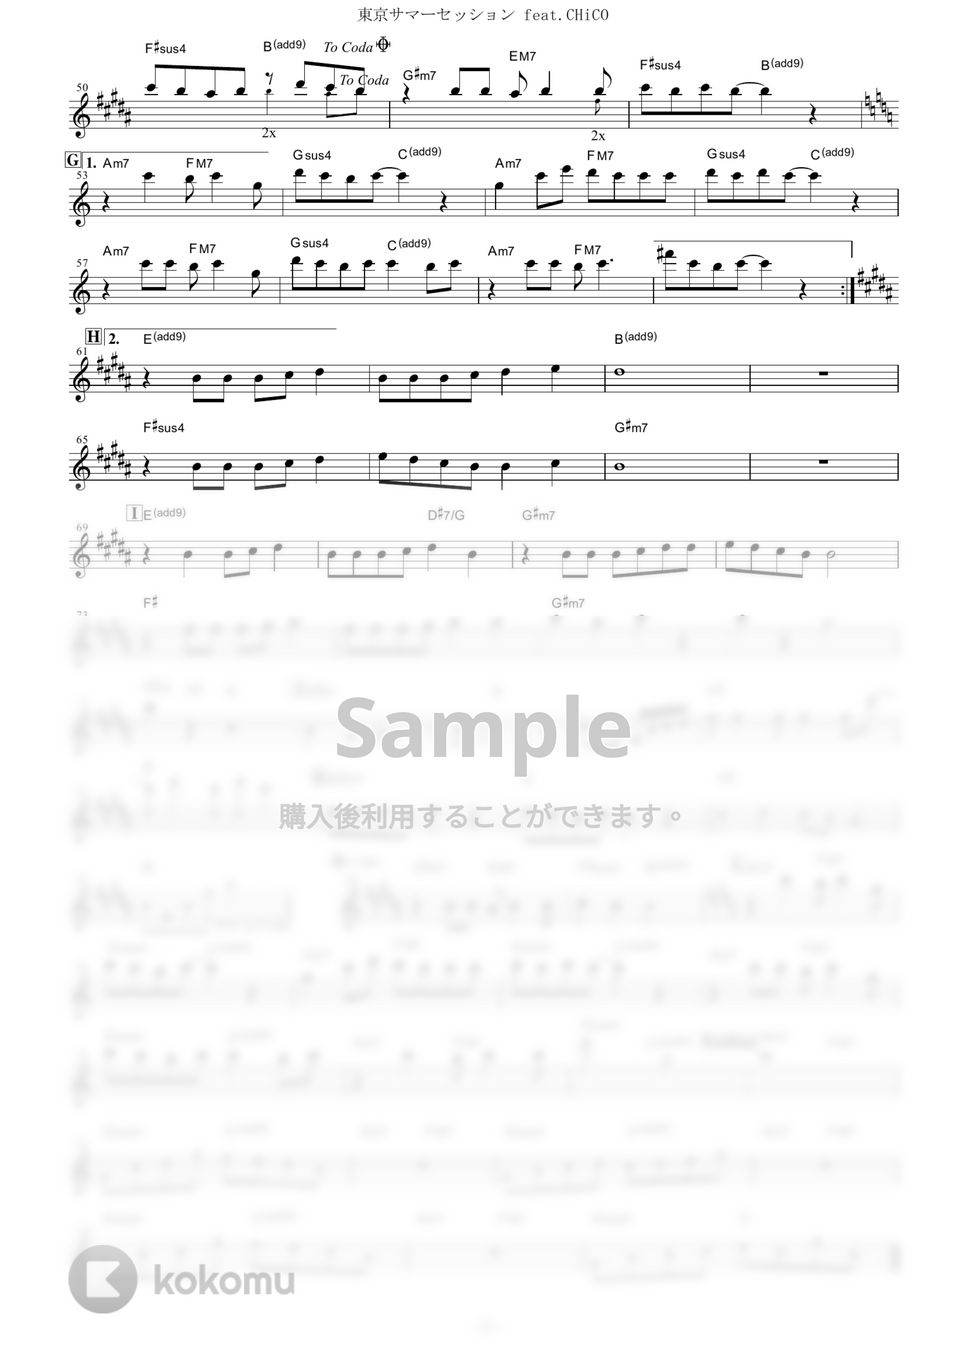 HoneyWorks - 東京サマーセッション feat.CHiCO (『いつだって僕らの恋は10センチだった。』 / in C) by muta-sax